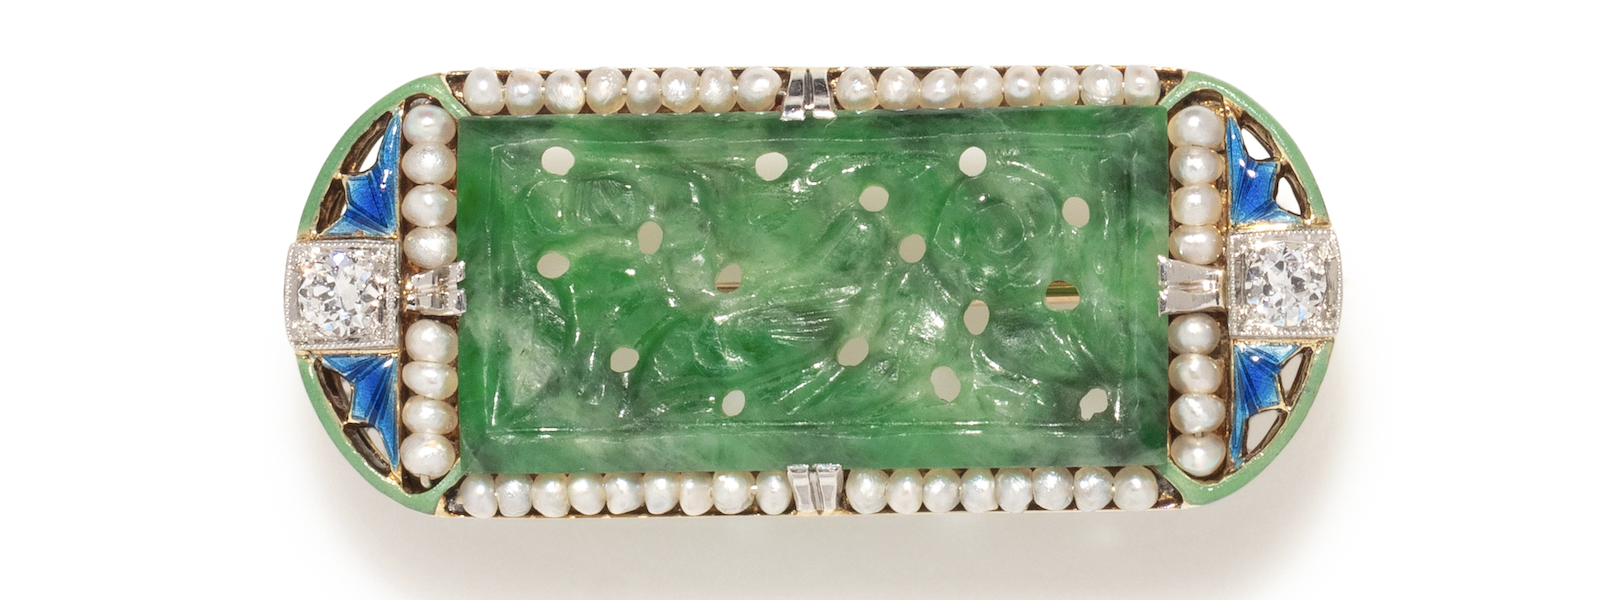 Art Deco Bailey, Banks & Biddle jade, diamond and enamel brooch, estimated at $1,000-$2,000